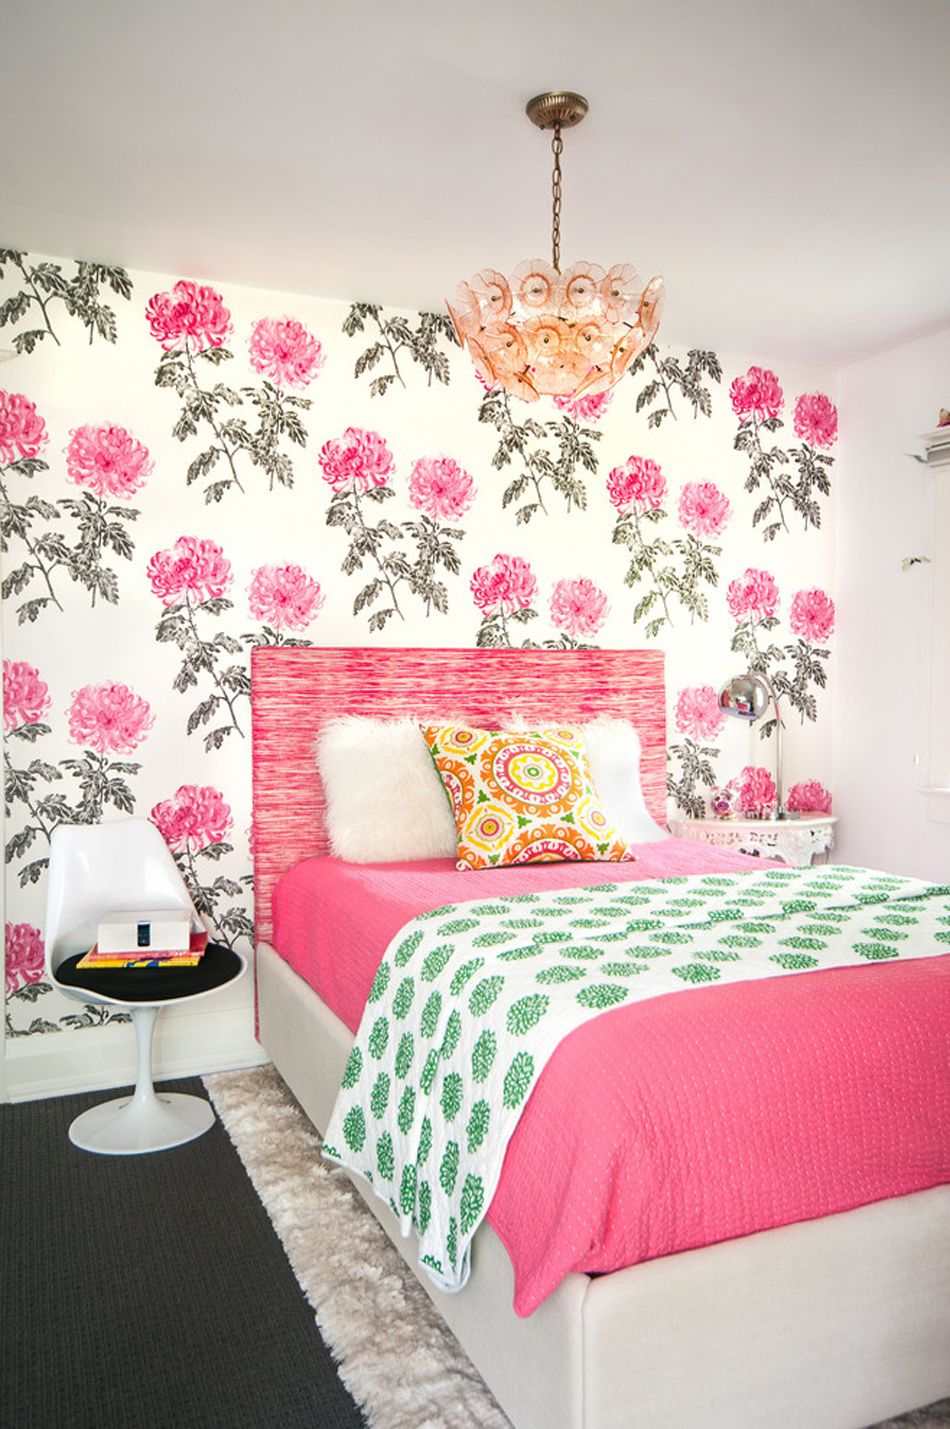 tapete dinding kamar tidur romantis,schlafzimmer,bett,zimmer,möbel,rosa